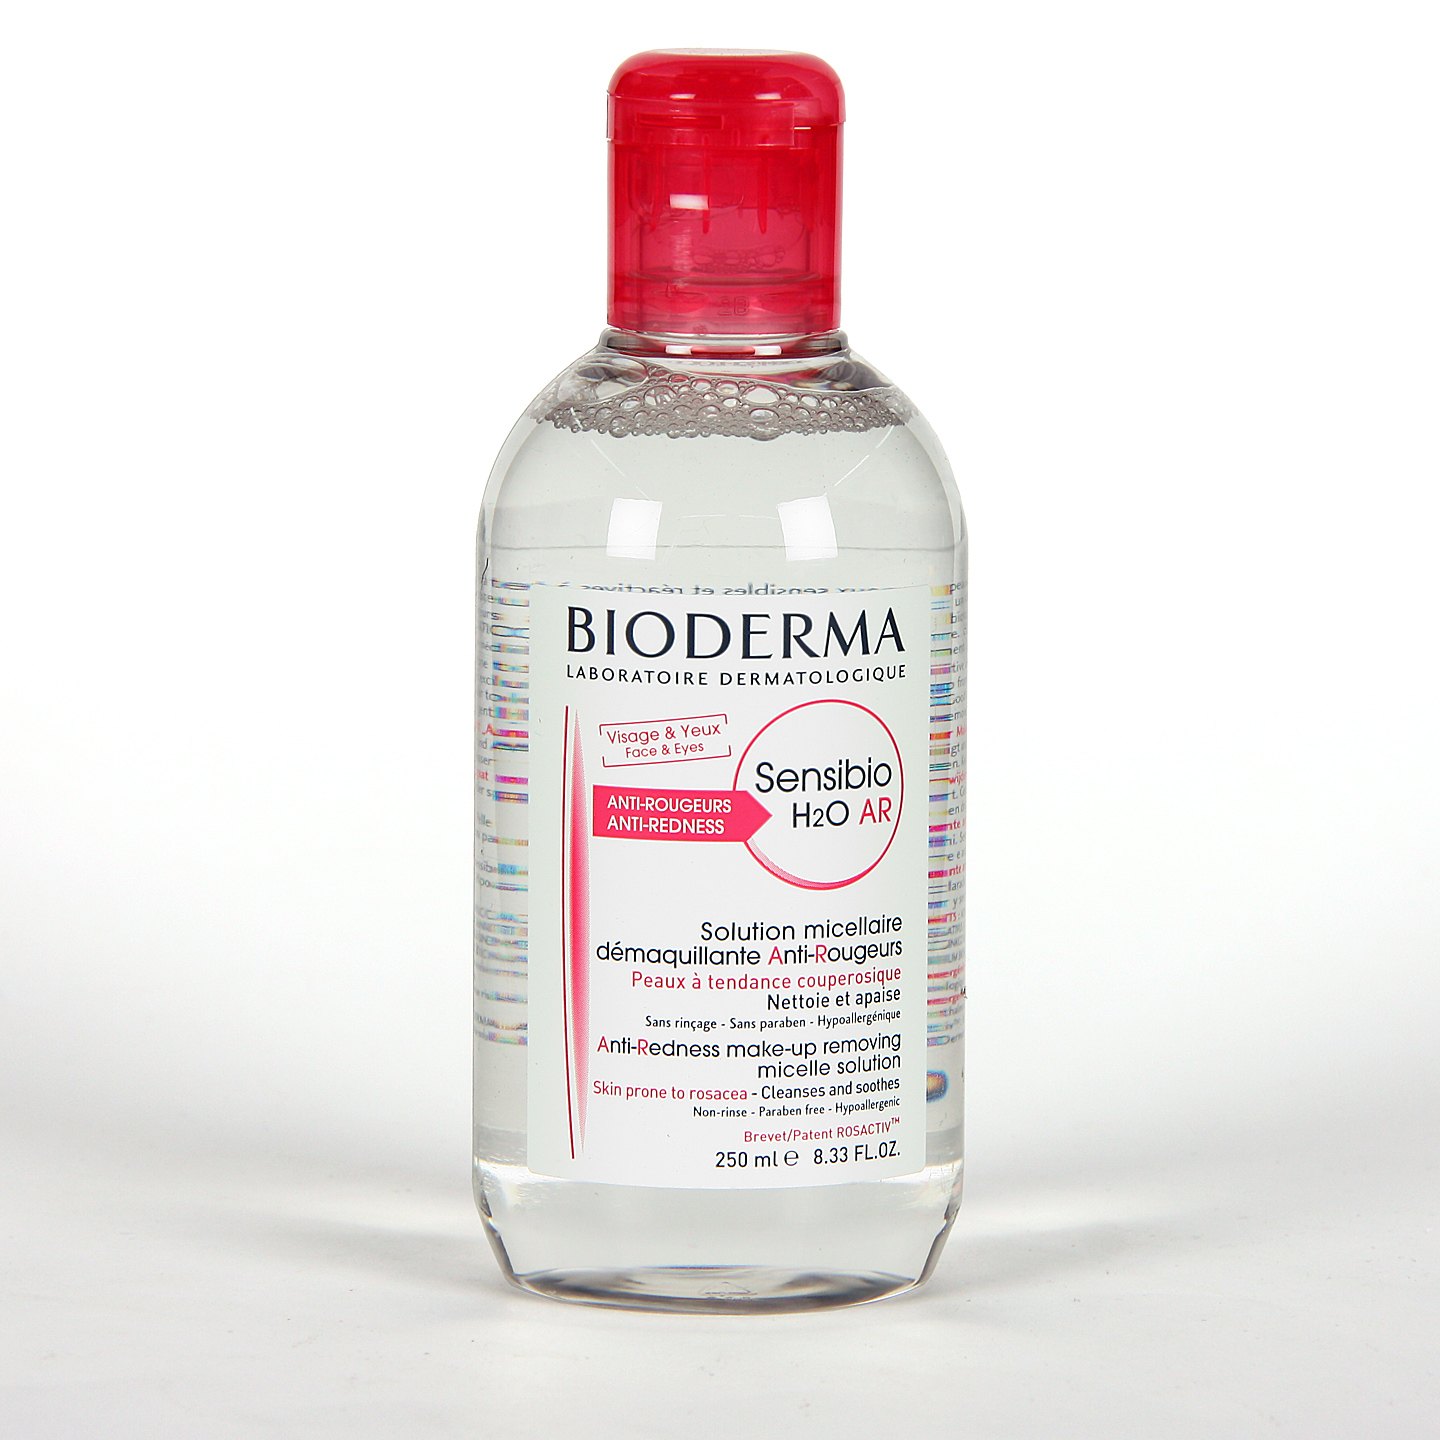 Bioderma Sensibio H2O AR Solución micelar antirrojeces 250 ml, Rosácea